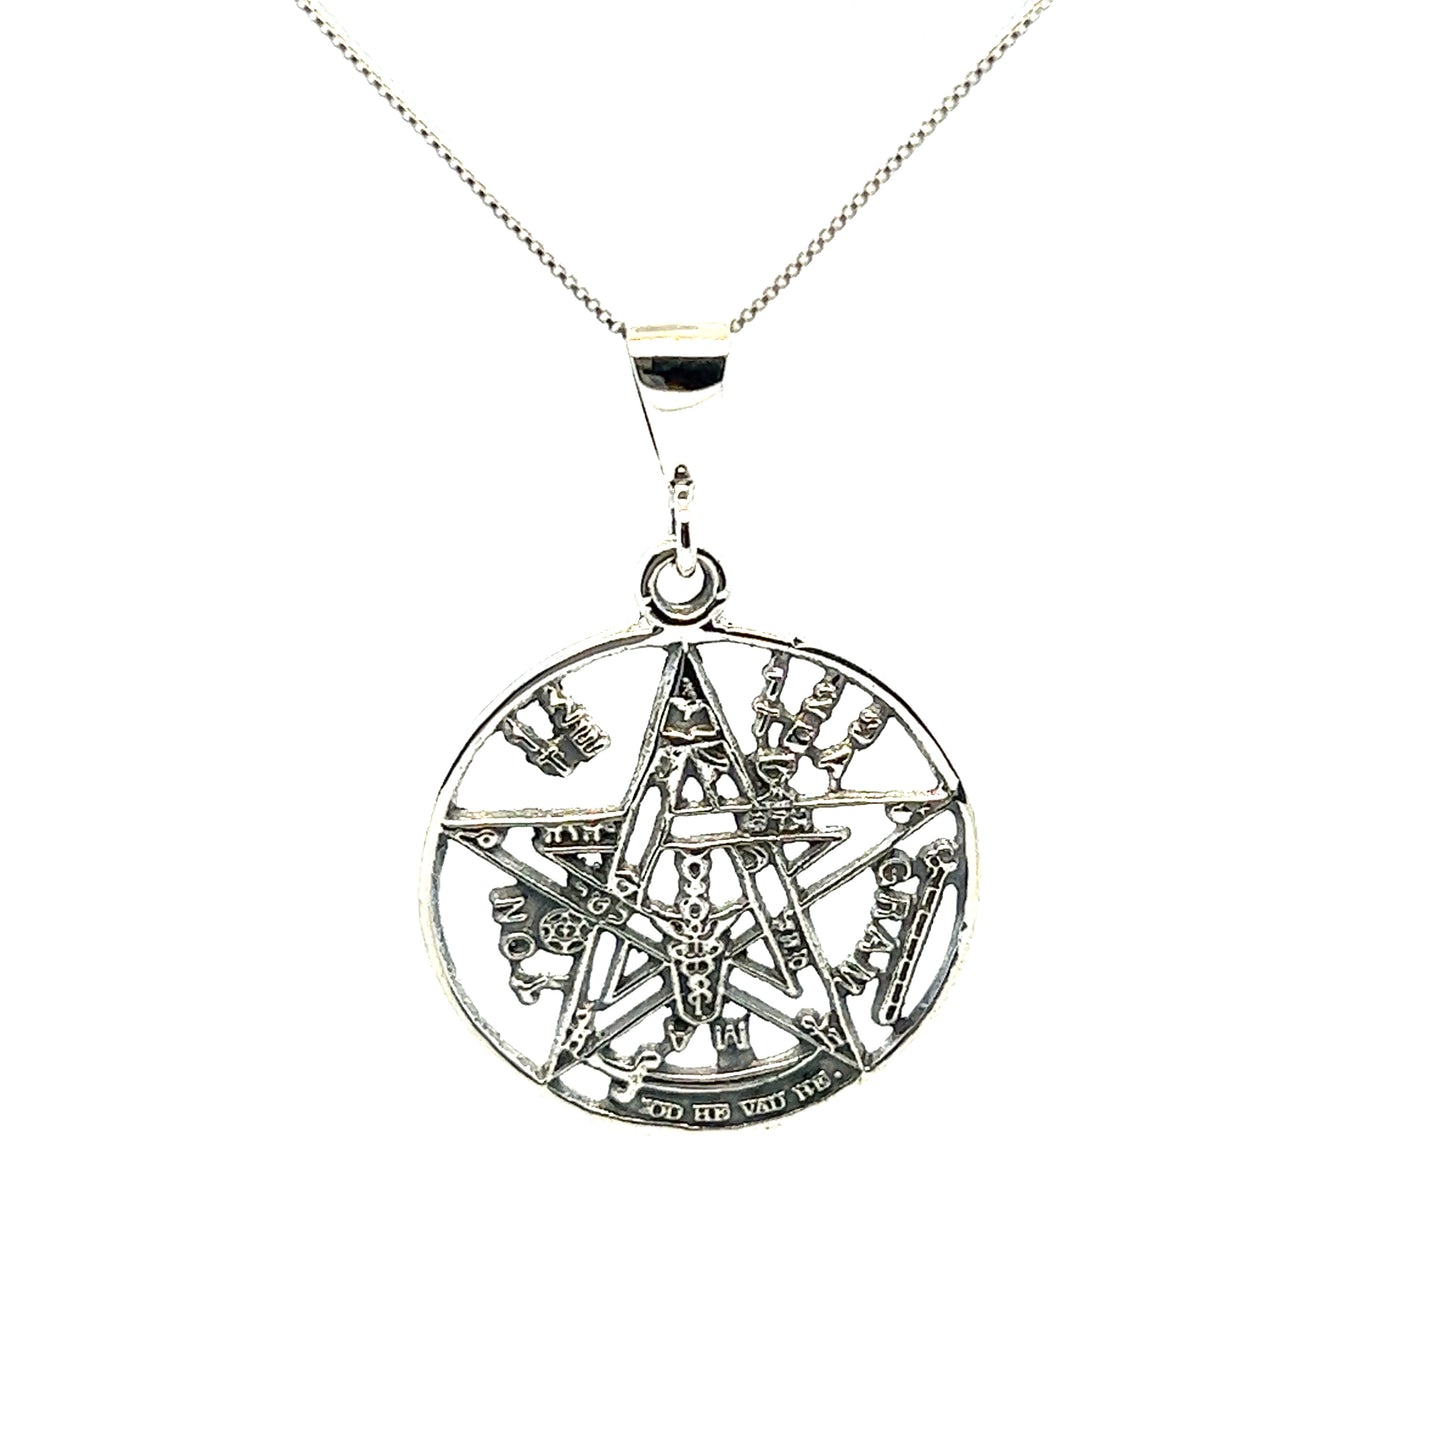 A Super Silver Tetragrammaton pendant on a chain, symbolizing faith.